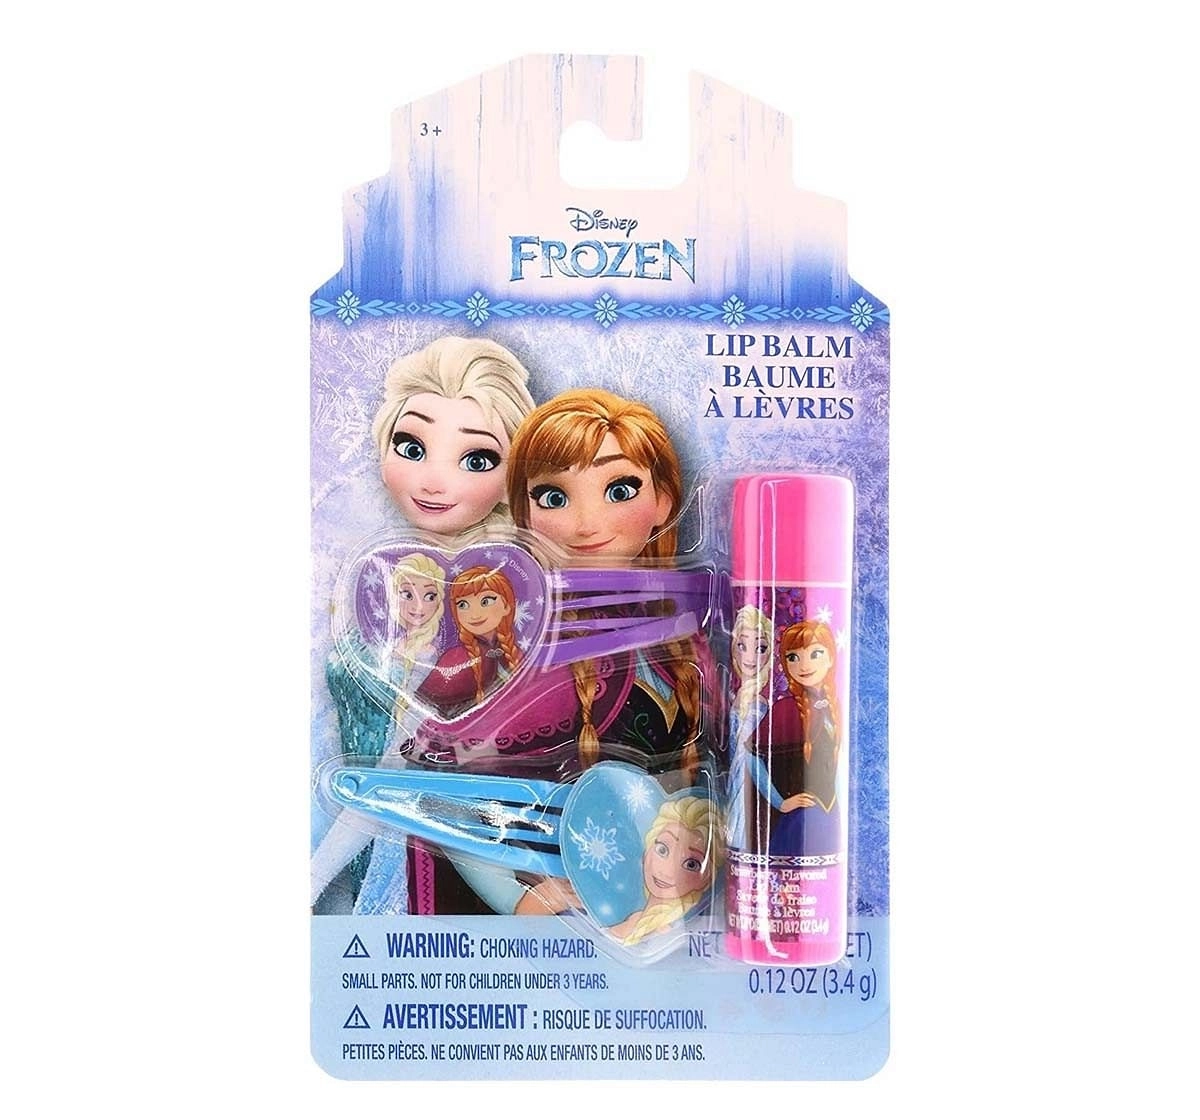 Townley Girl Disney Frozen Lip Balm - Single Pack Diy Art & Craft Kits for Kids Age 3Y+